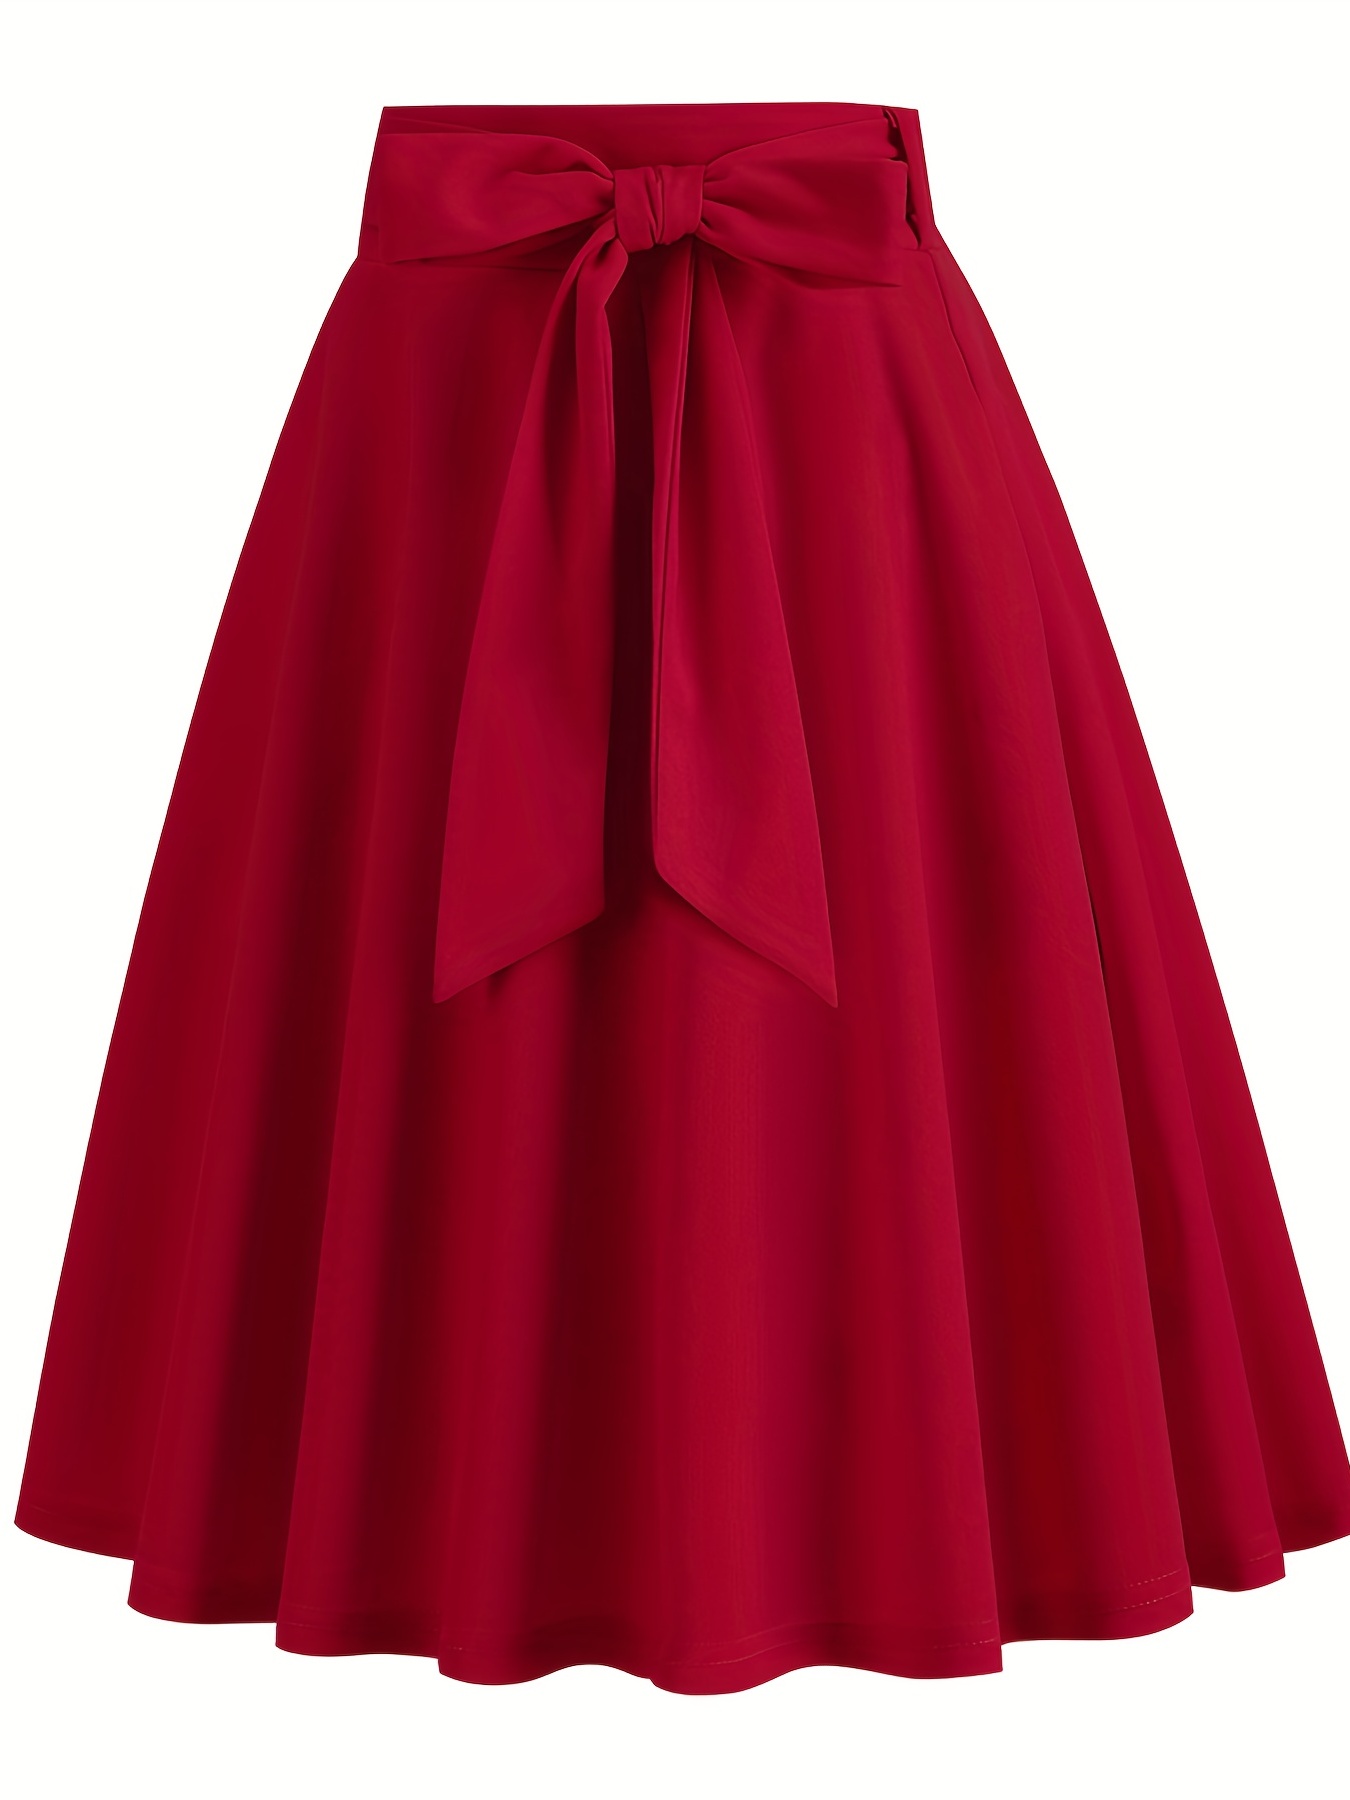 Red Linen Midi Skirt for Women, A Line Swing Skirt With Pockets